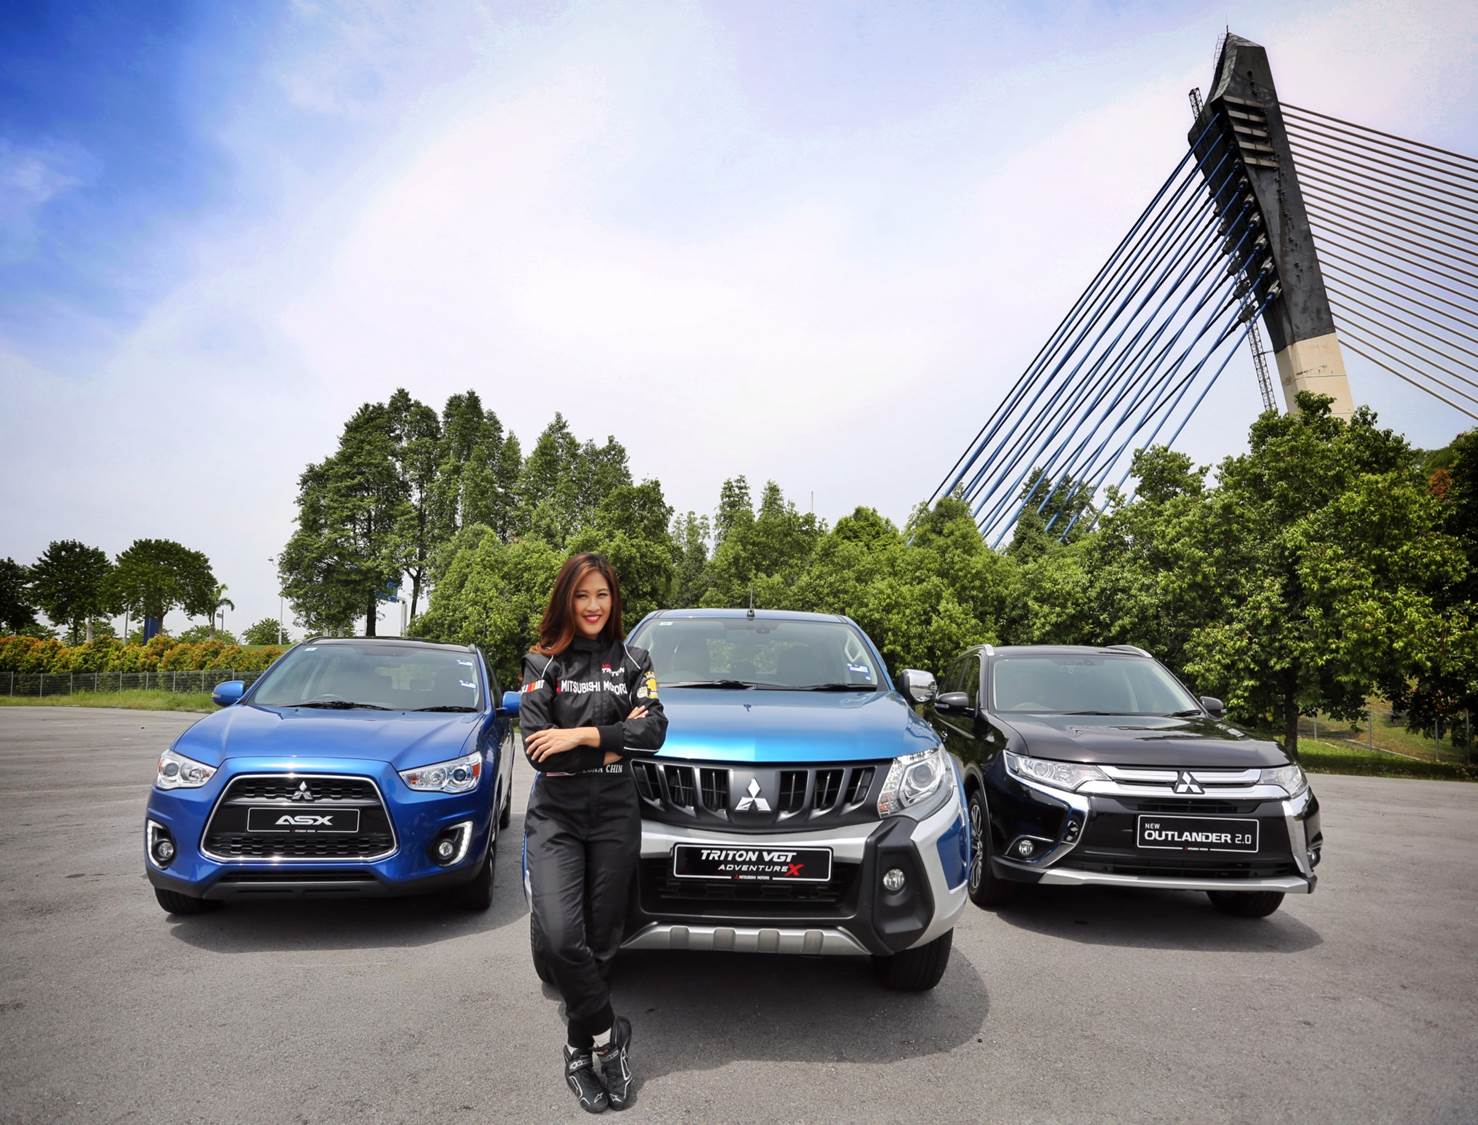 Malaysia Motorsports Athlete, Leona Chin as Brand Ambassador for MMM